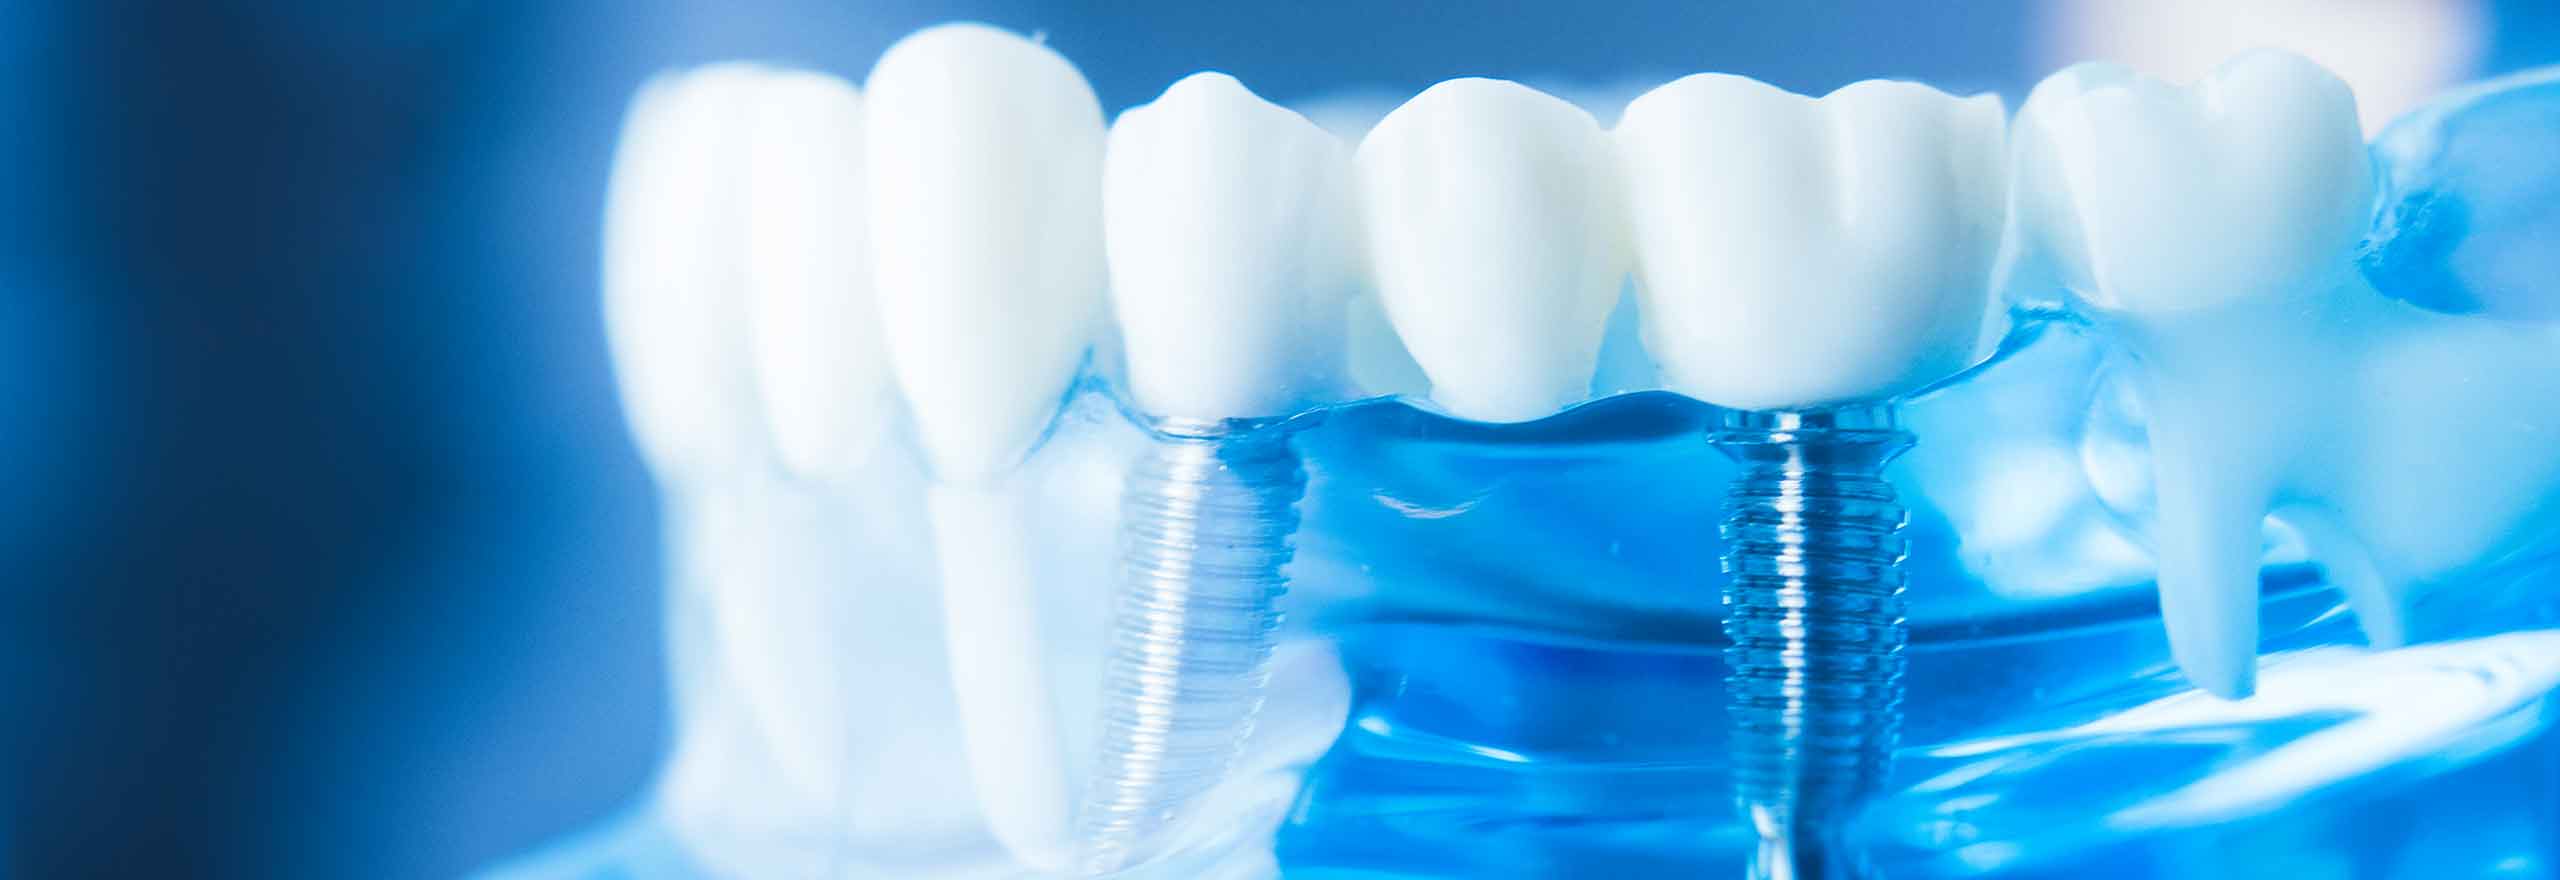 Dental implants in a dentistry teaching model  